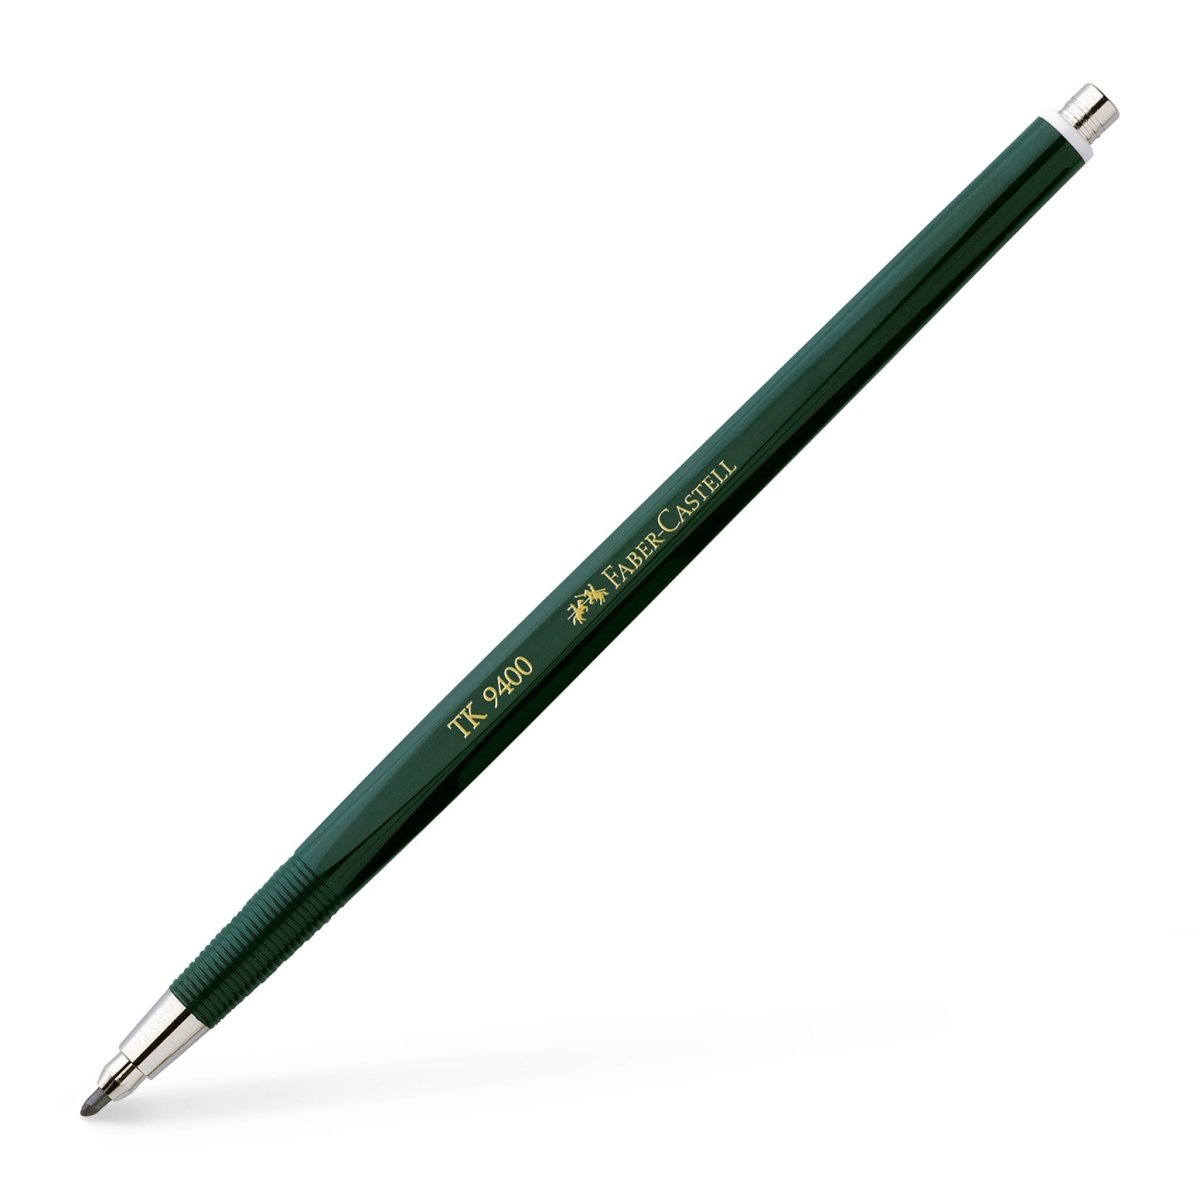 Faber Castell TK9400 Clutch 2 mm Lead Holder Drawing Pencil with rib grip #139420 - The Merri Artist - merriartist.com